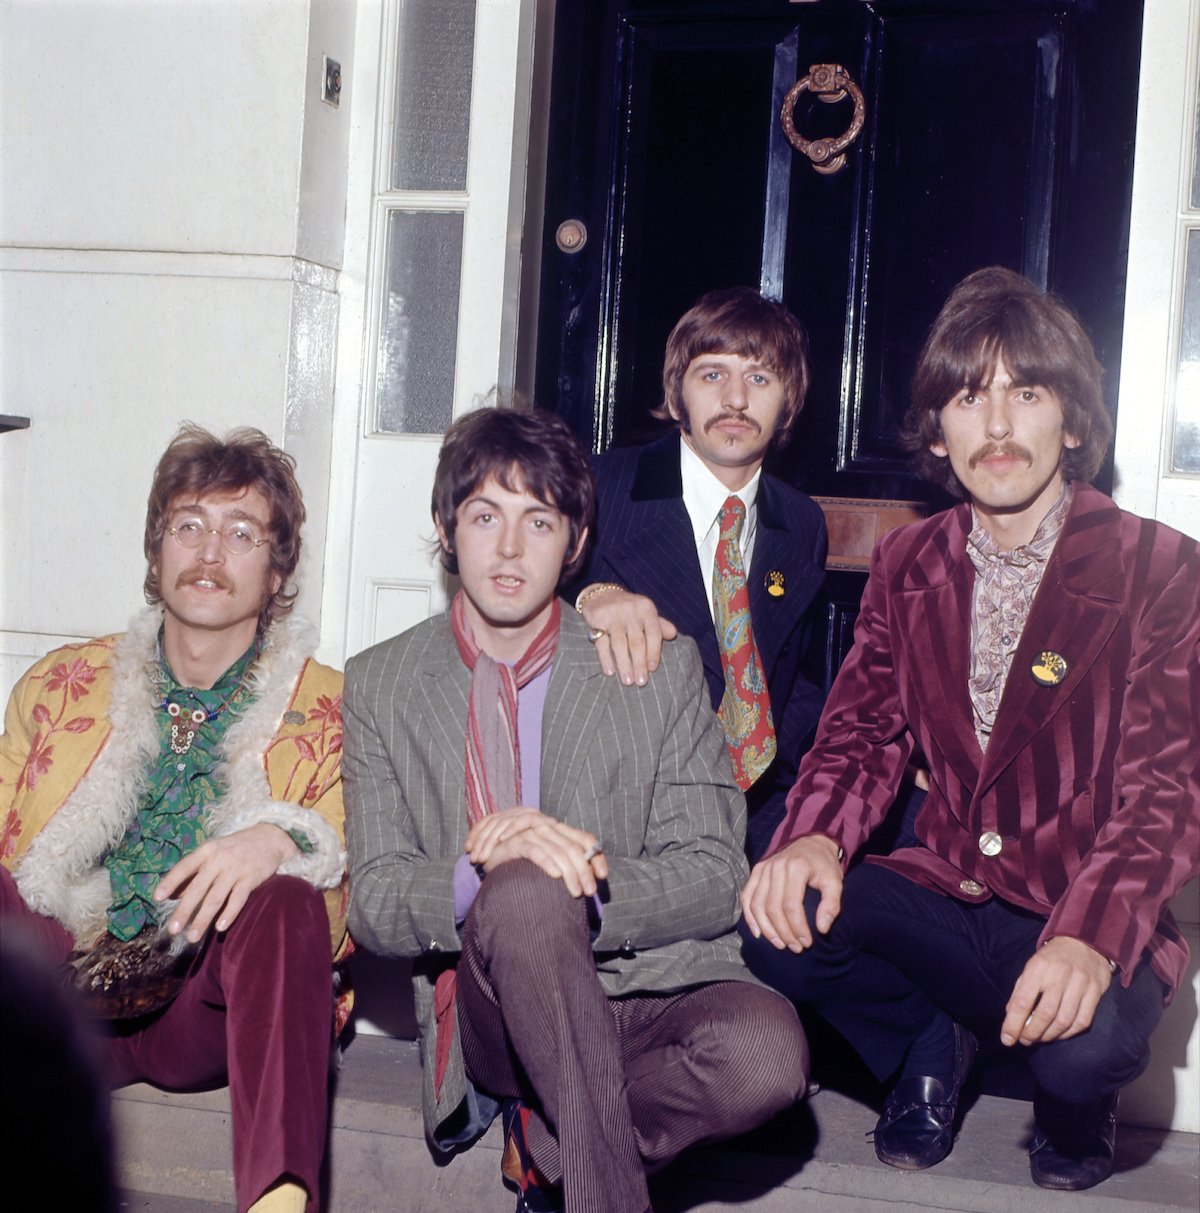 The Beatles John Lennon, Paul McCartney, Ringo Starr and George Harrison sit on steps